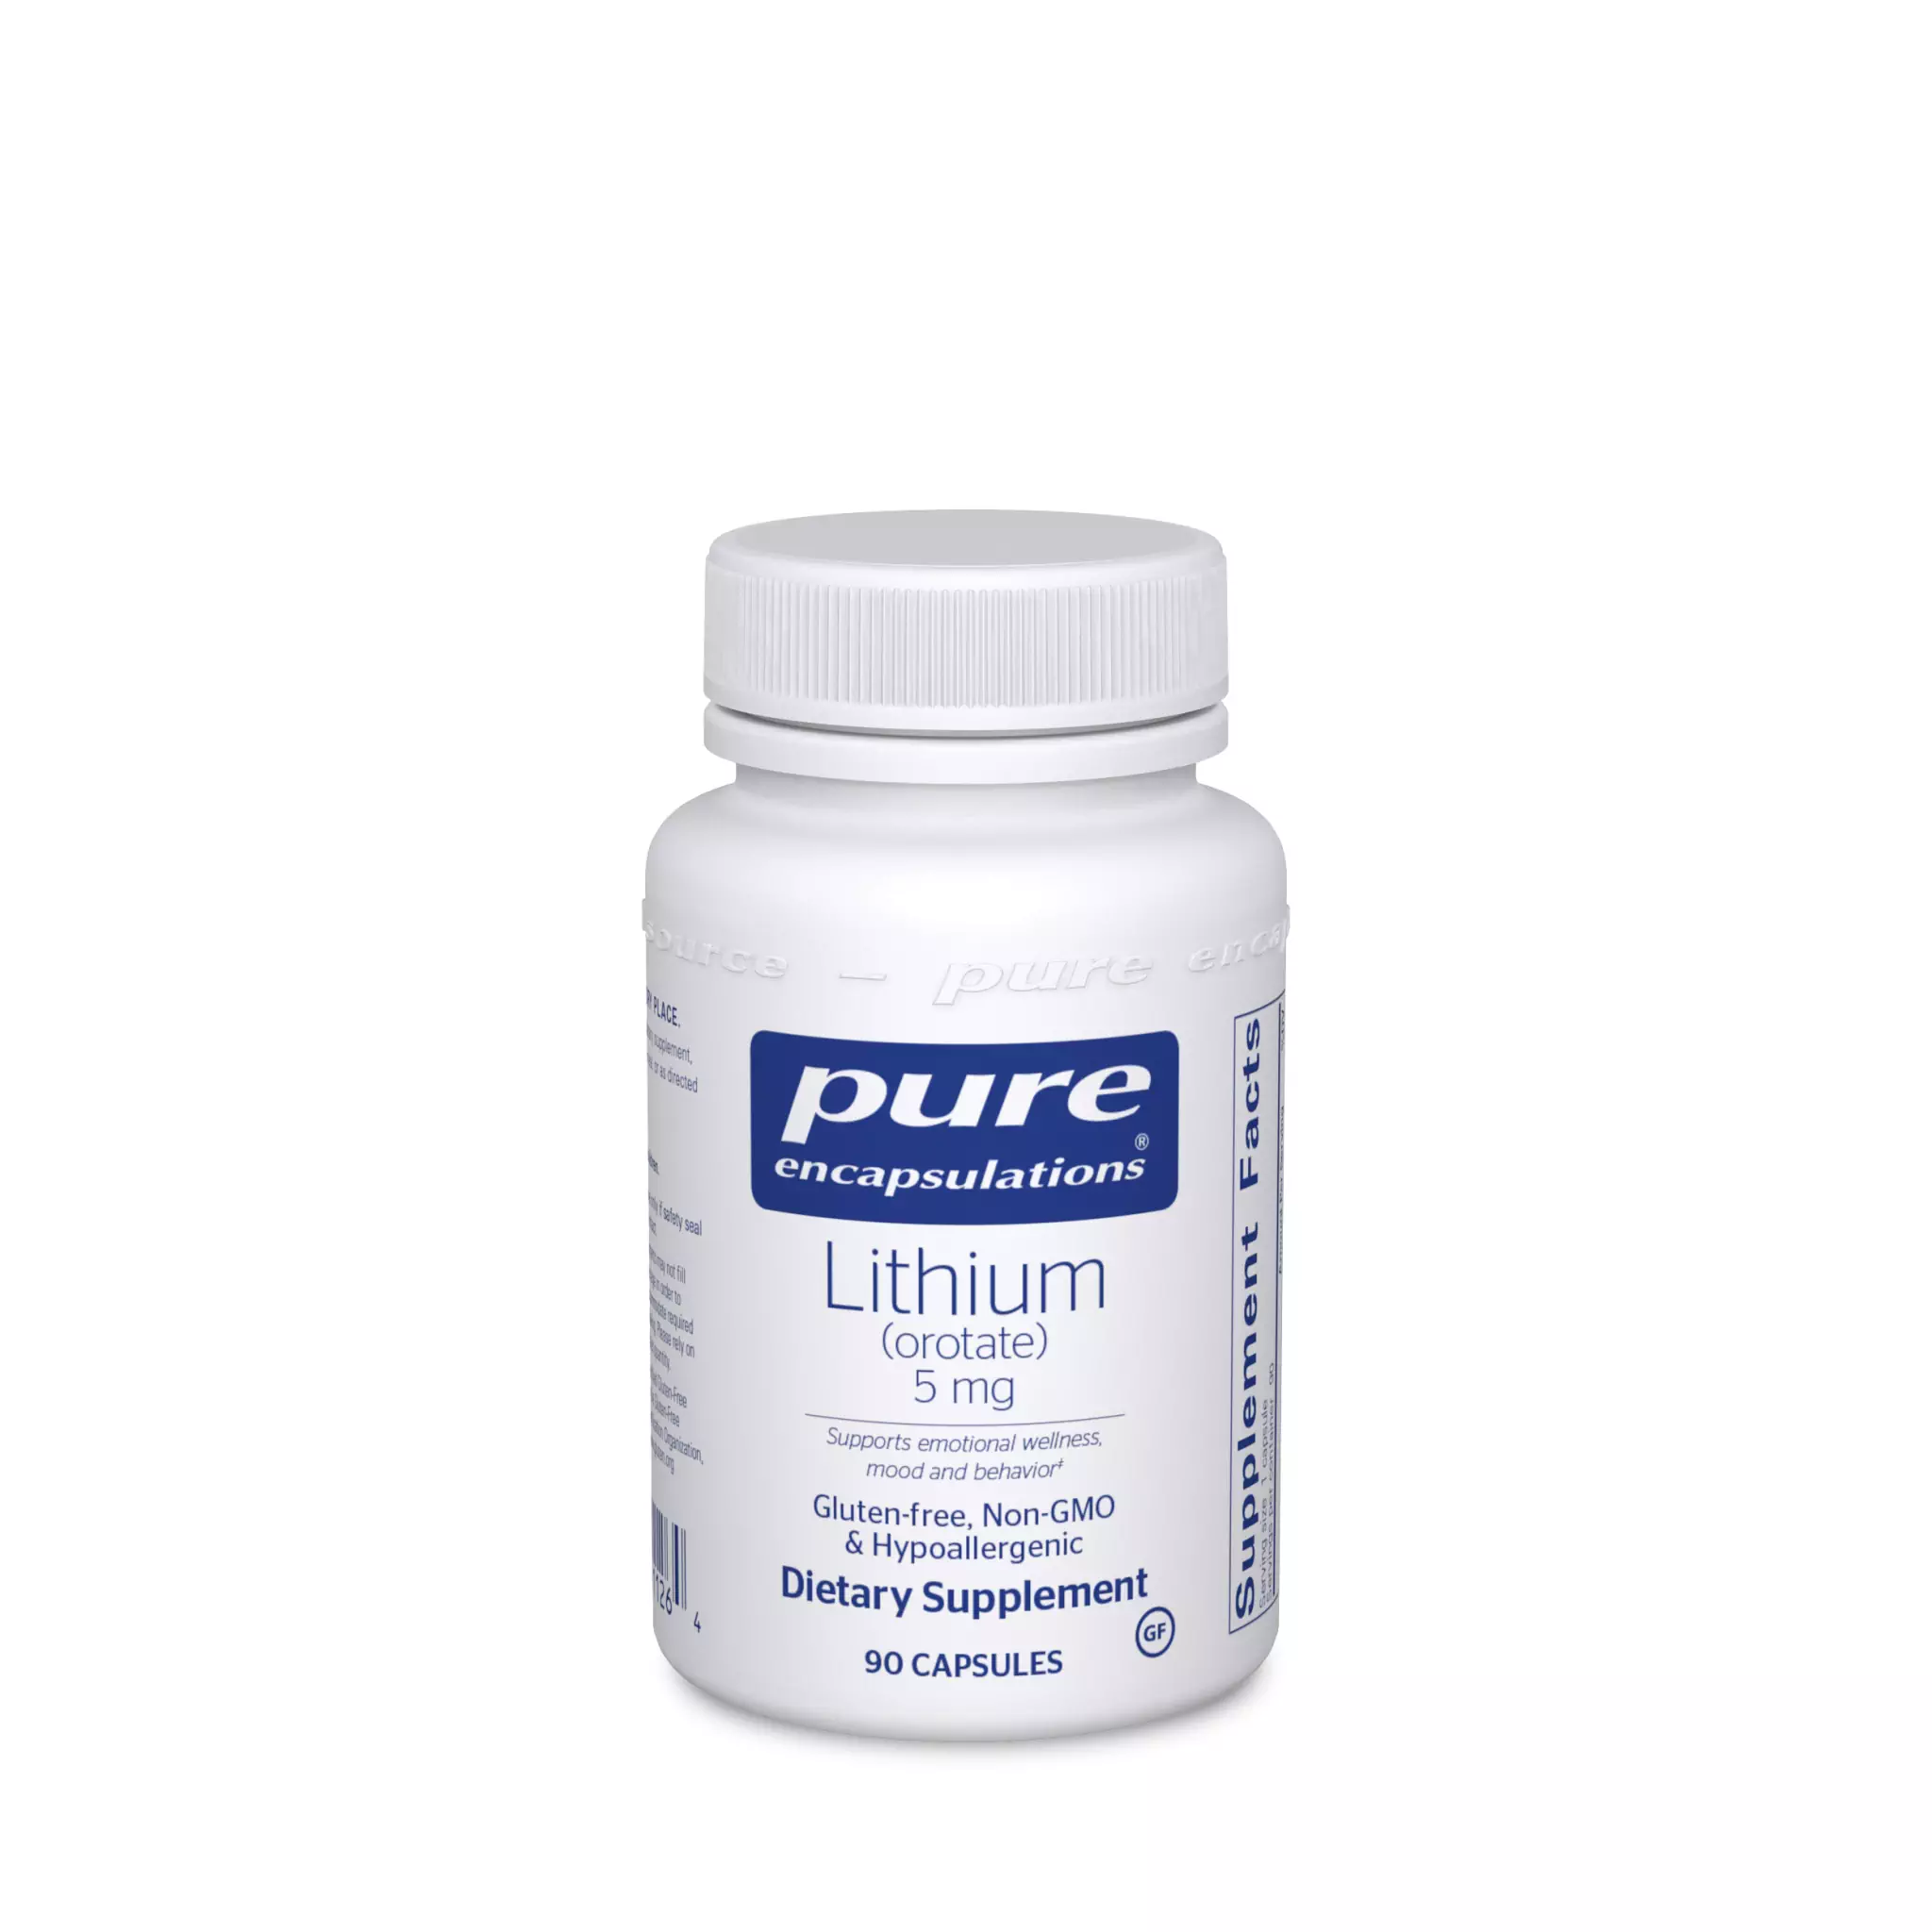 Pure Encapsulations - Lithium Orotate 5 mg